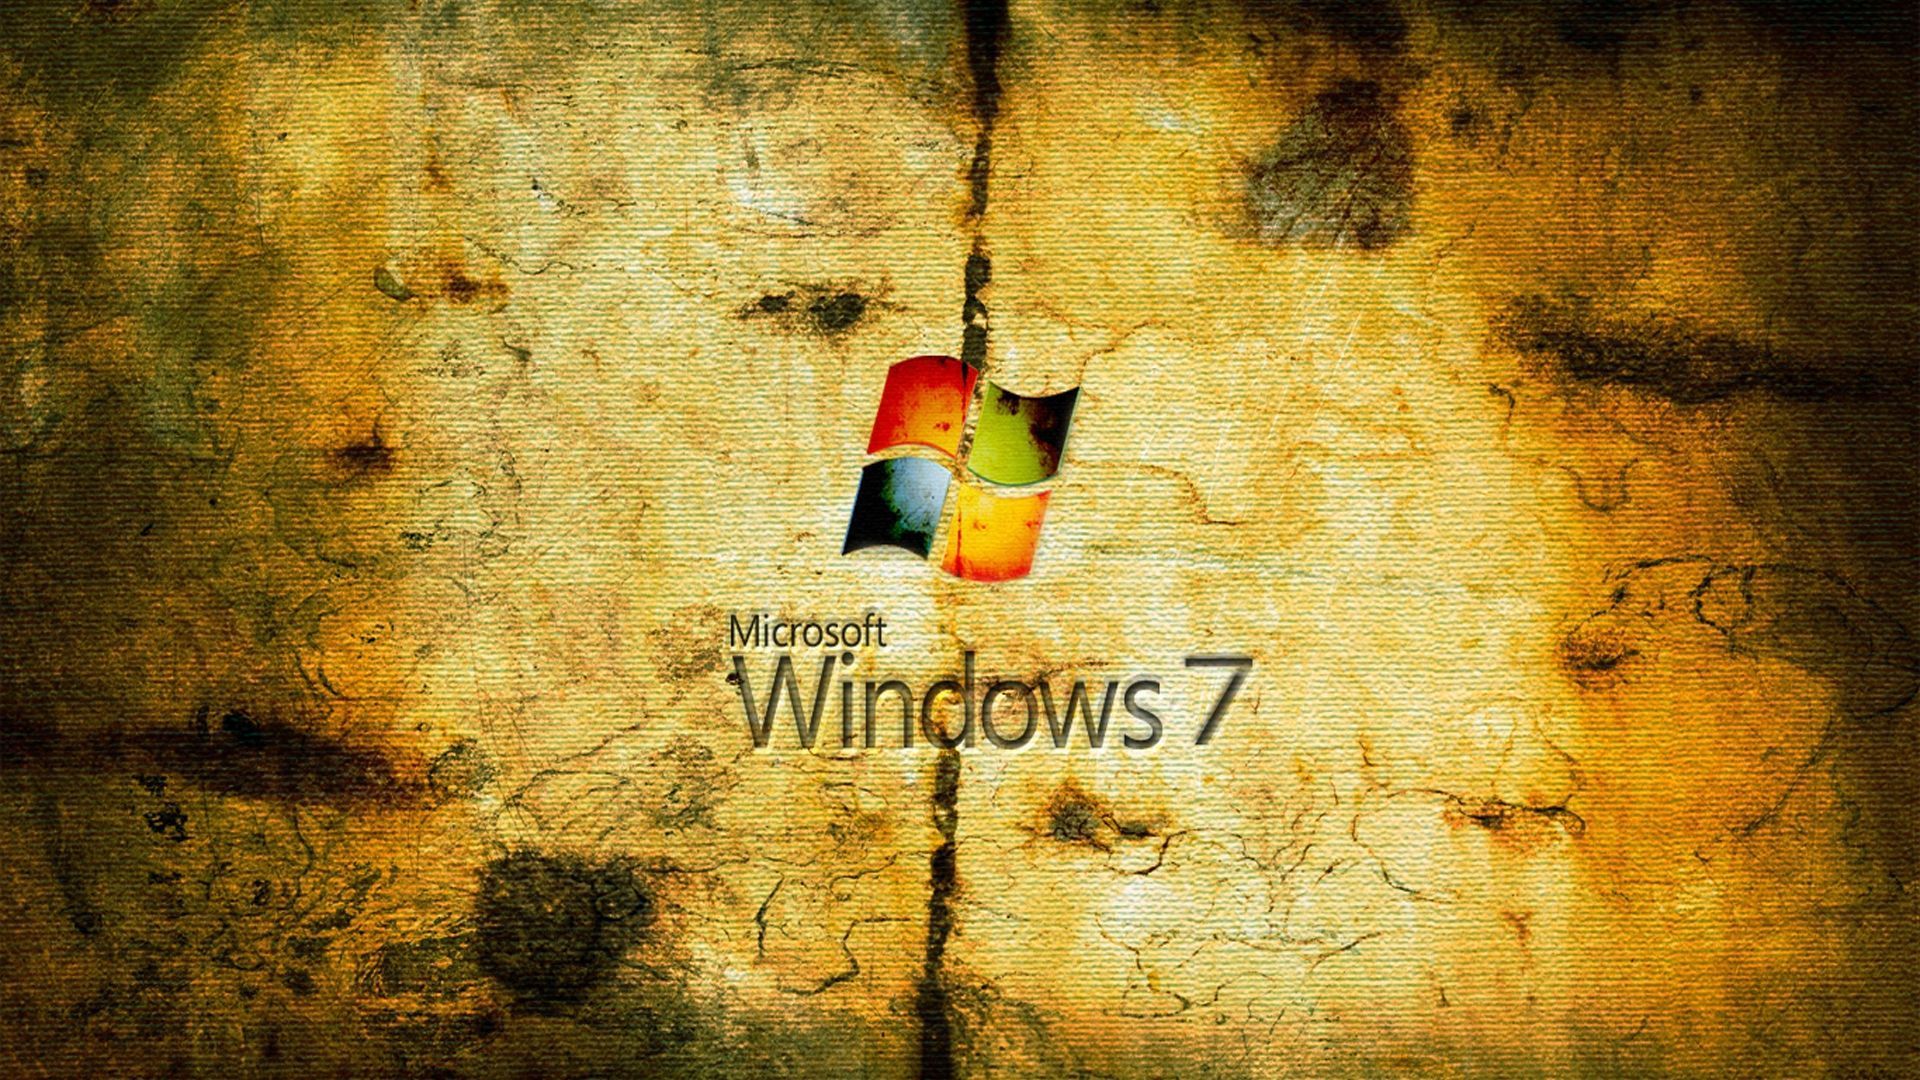 Worn Windows 7 Wallpaper - HD Backgrounds